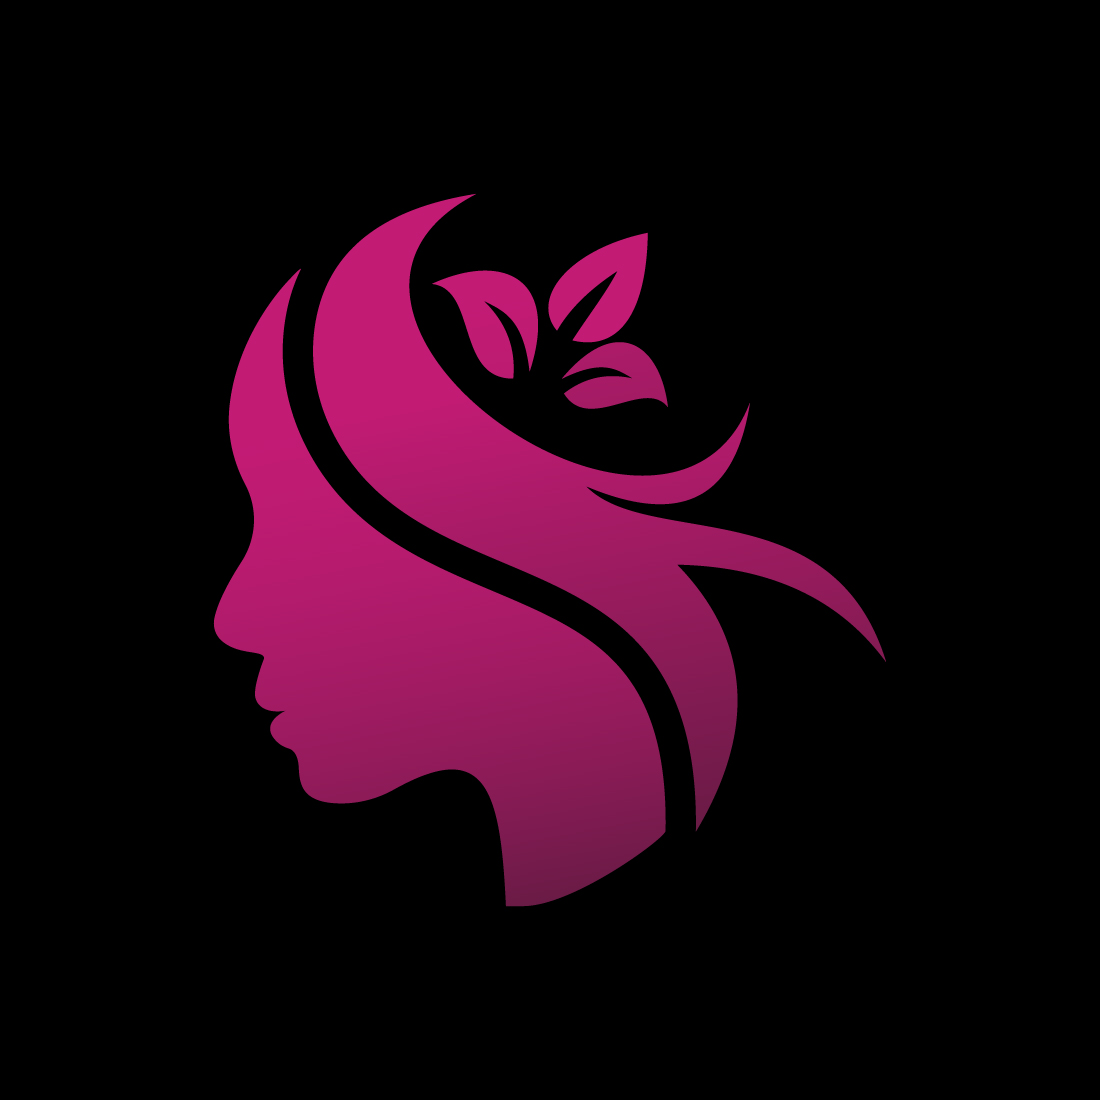 Beauty parlor, Skincare, Salon, Spa, Dermatology Clinic Flower Logo Design Vector design concept cover image.